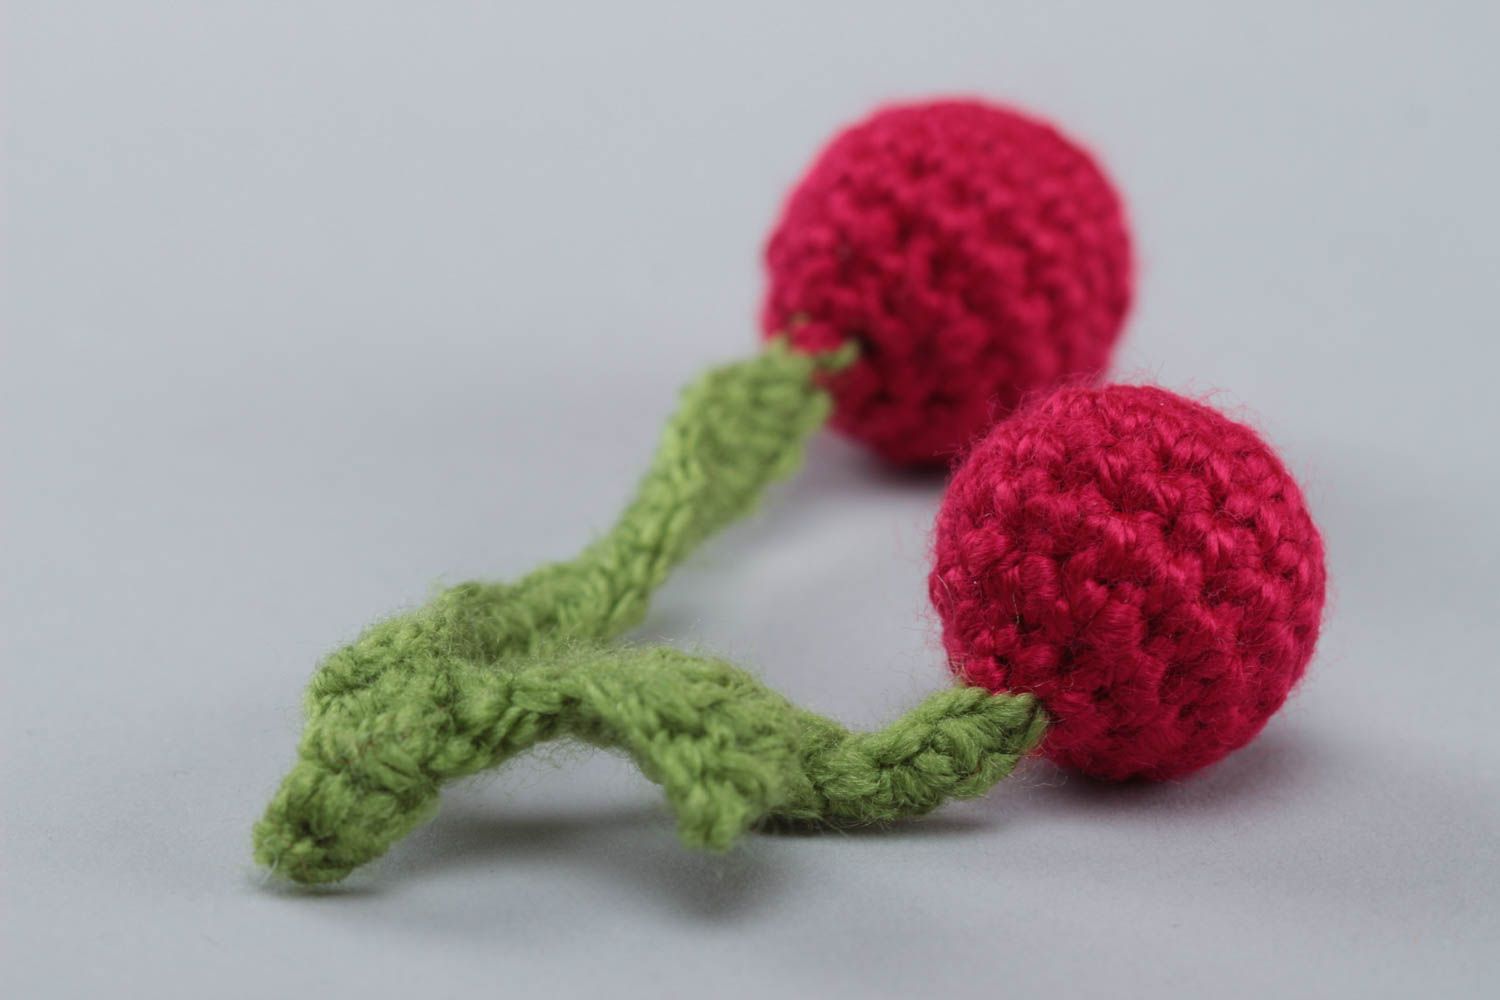 Handmade small designer crochet soft toy cherry for kids and interior decor photo 4